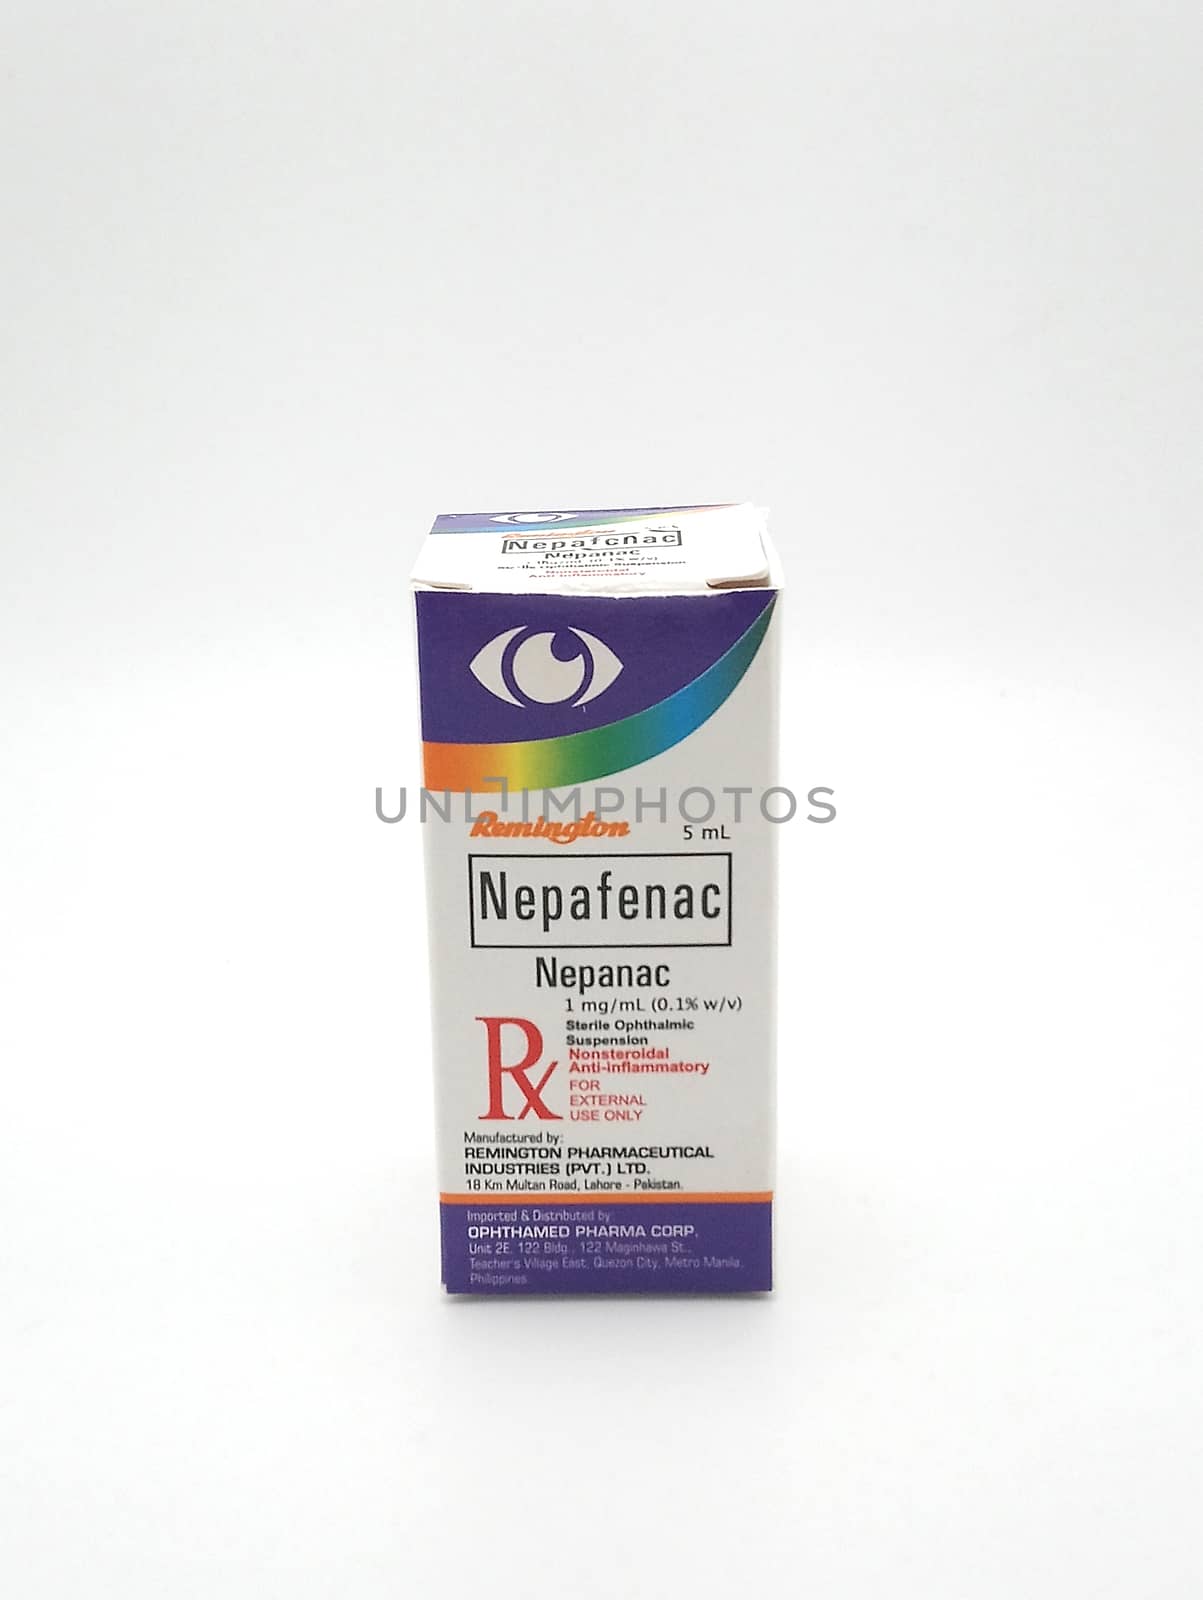 MANILA, PH - SEPT 25 - Nepafenac nepanac sterile opthalmic suspension drops box on September 25, 2020 in Manila, Philippines.